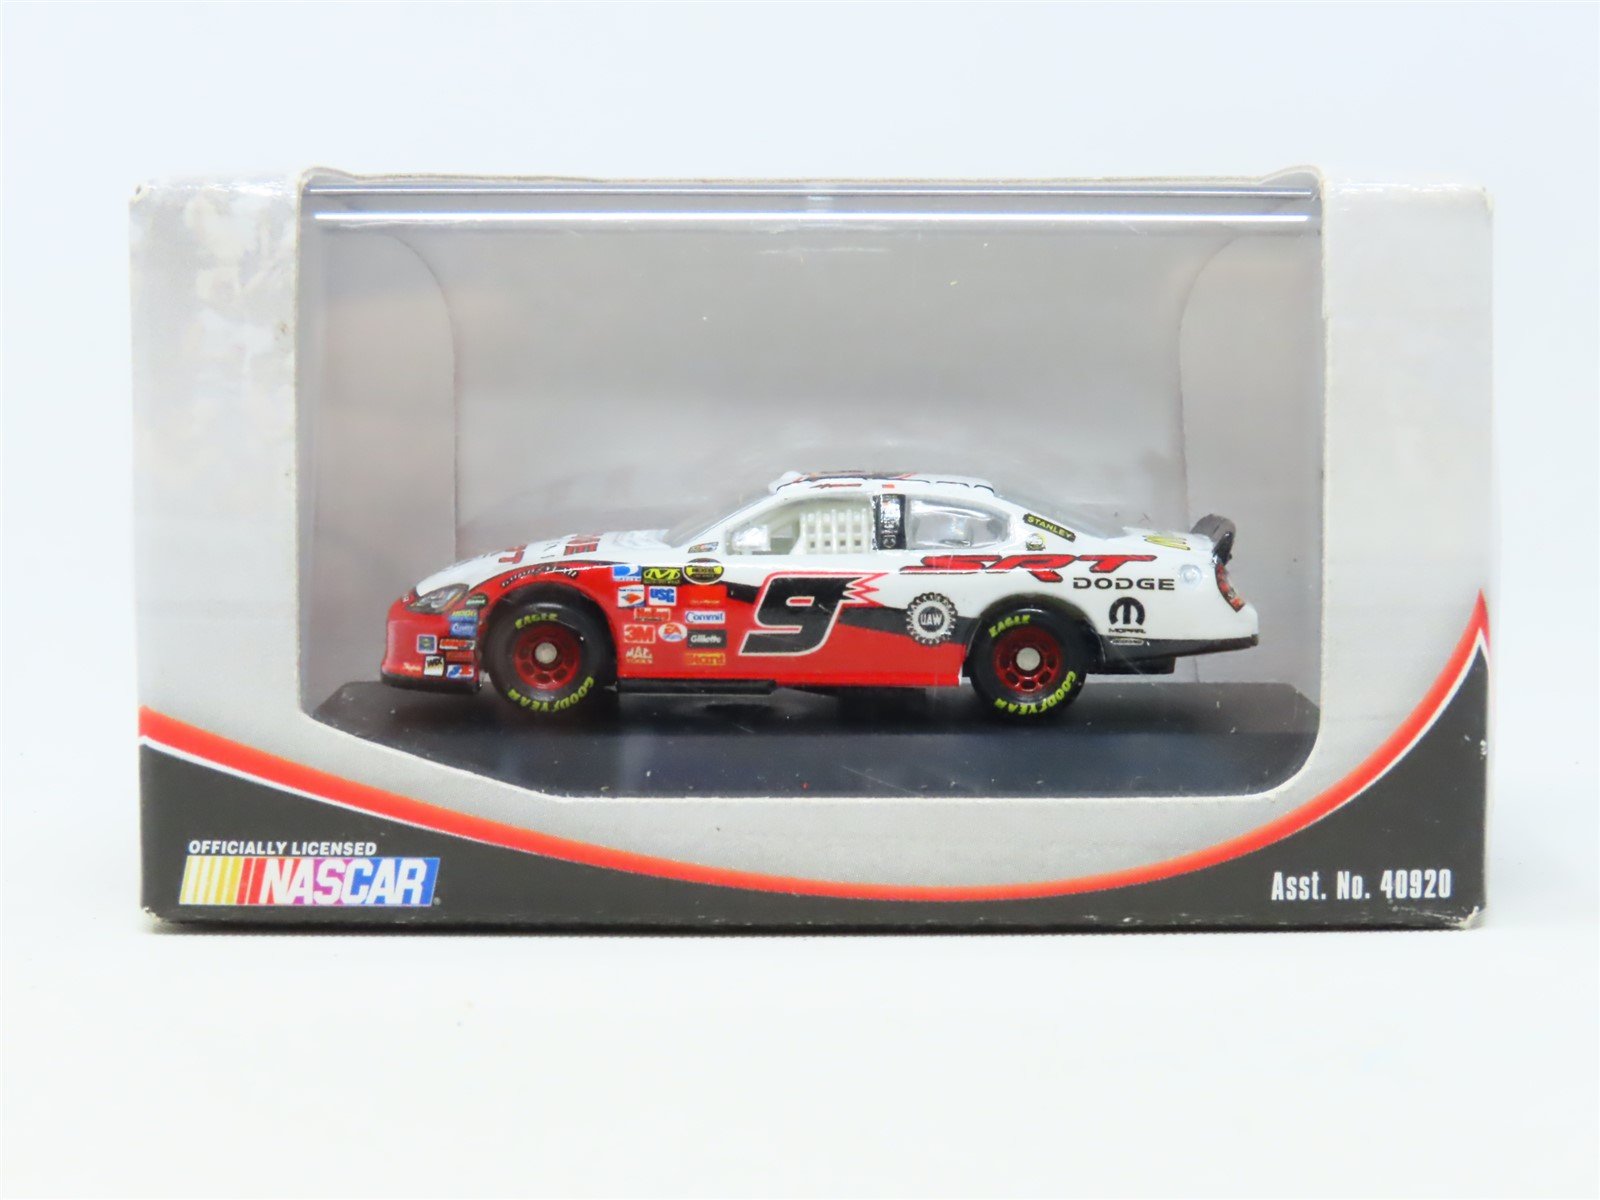 HO 1/87 Scale Winner's Circle NASCAR #47834 Dodge Charger - Kasey Kahne Car #9